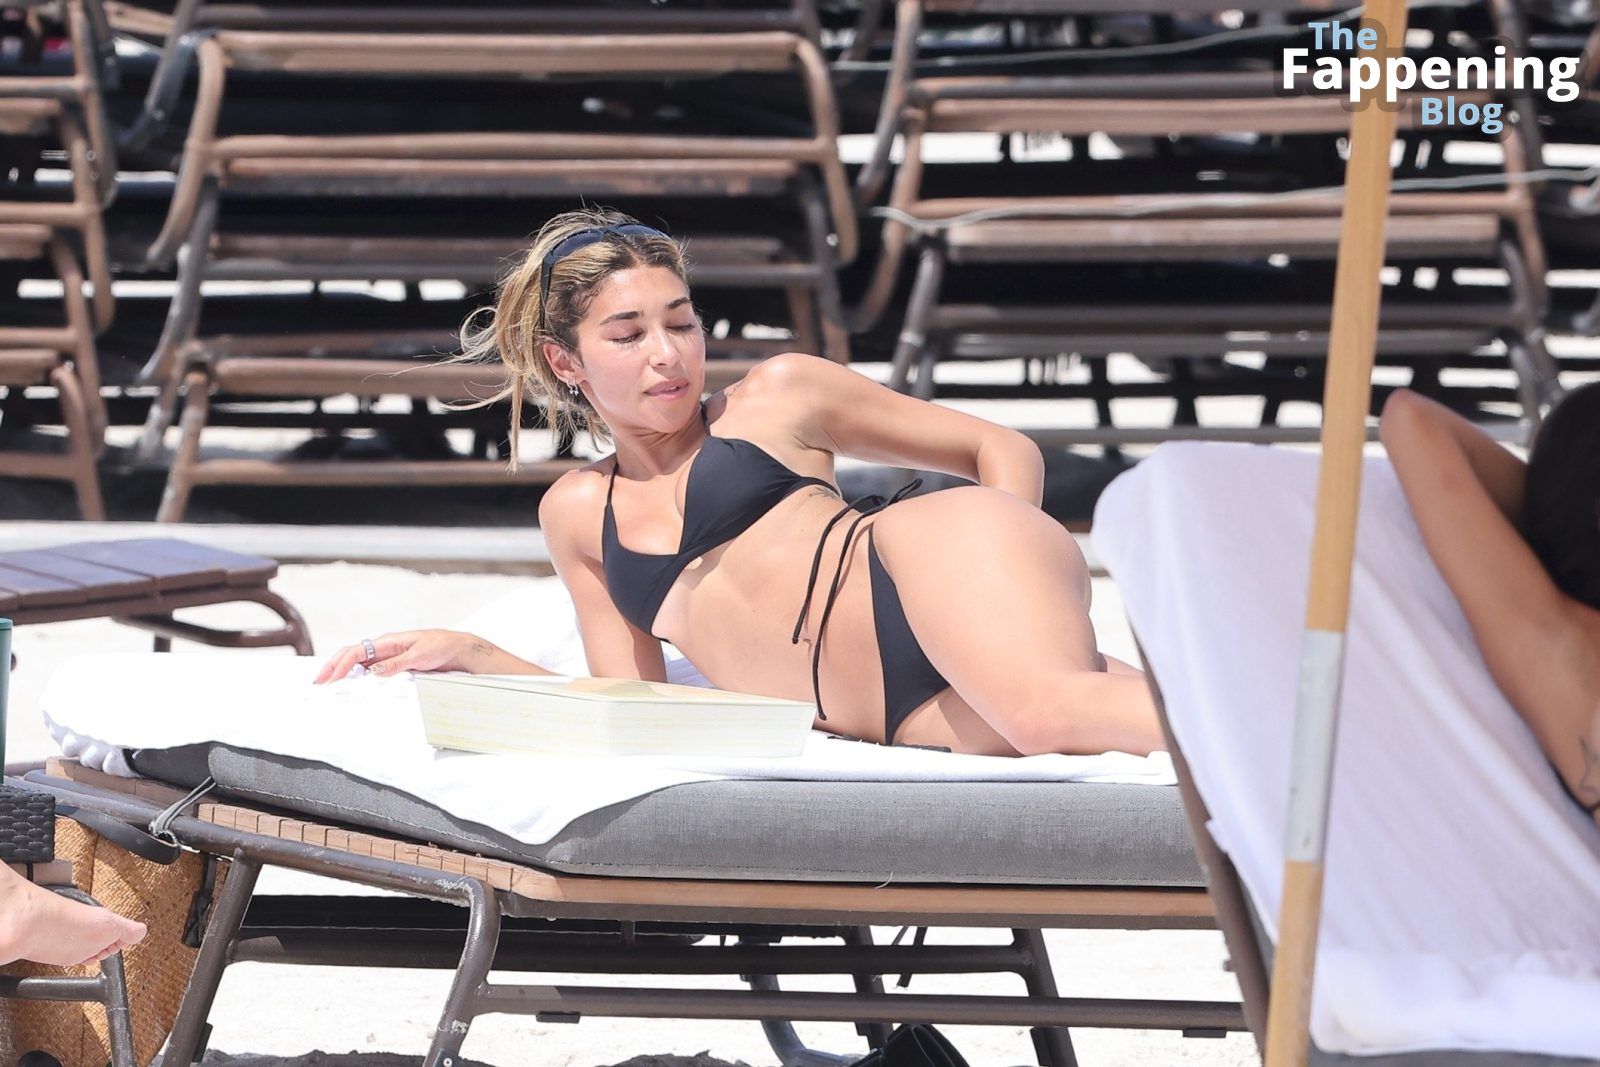 Chantel Jeffries Looks Hot on the Beach in a Black Bikini (19 Photos)